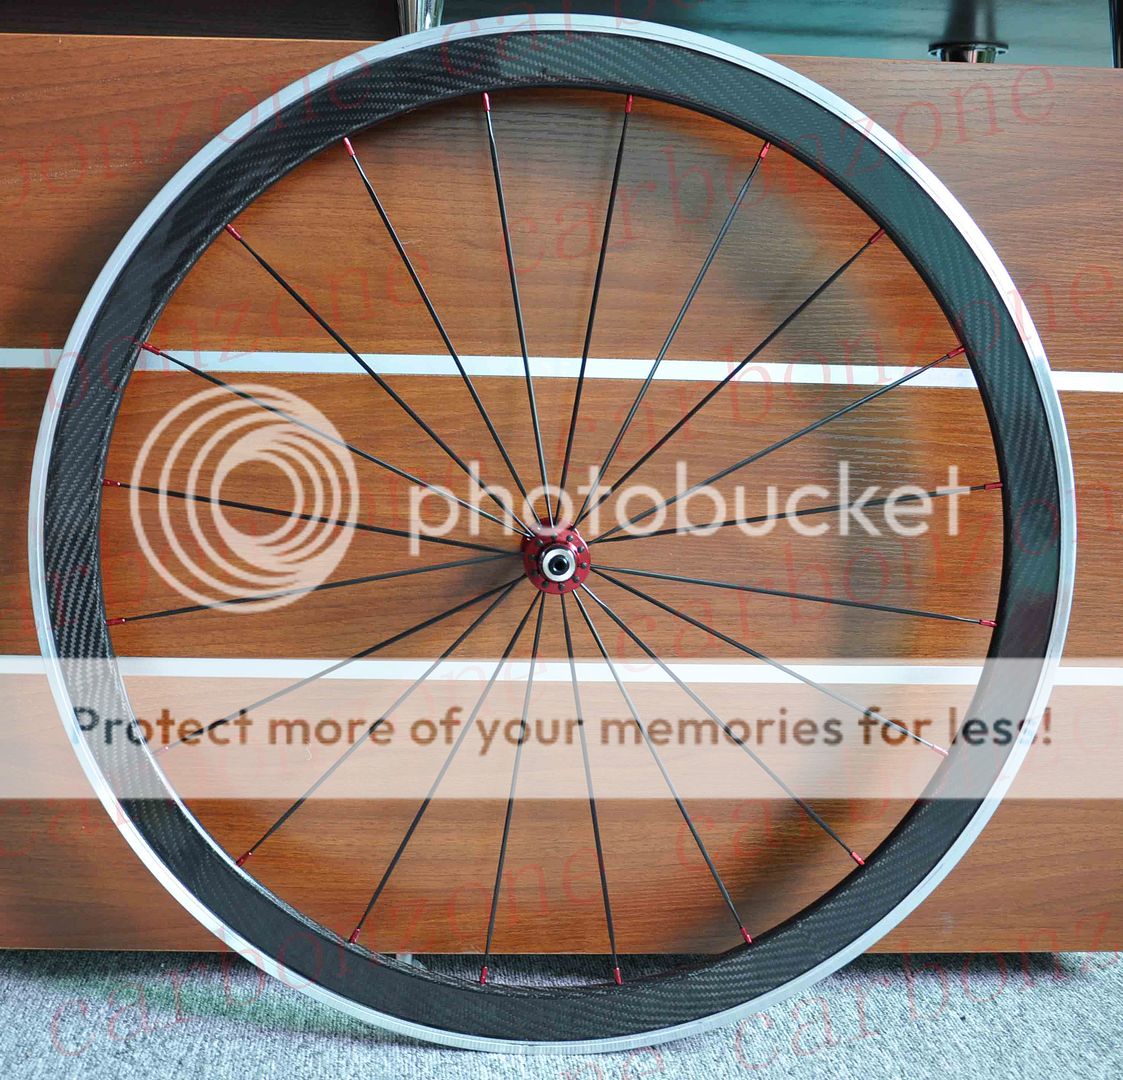 42mm Alloy Carbon Road Bike Clincher Wheels Wheelset Red Hub